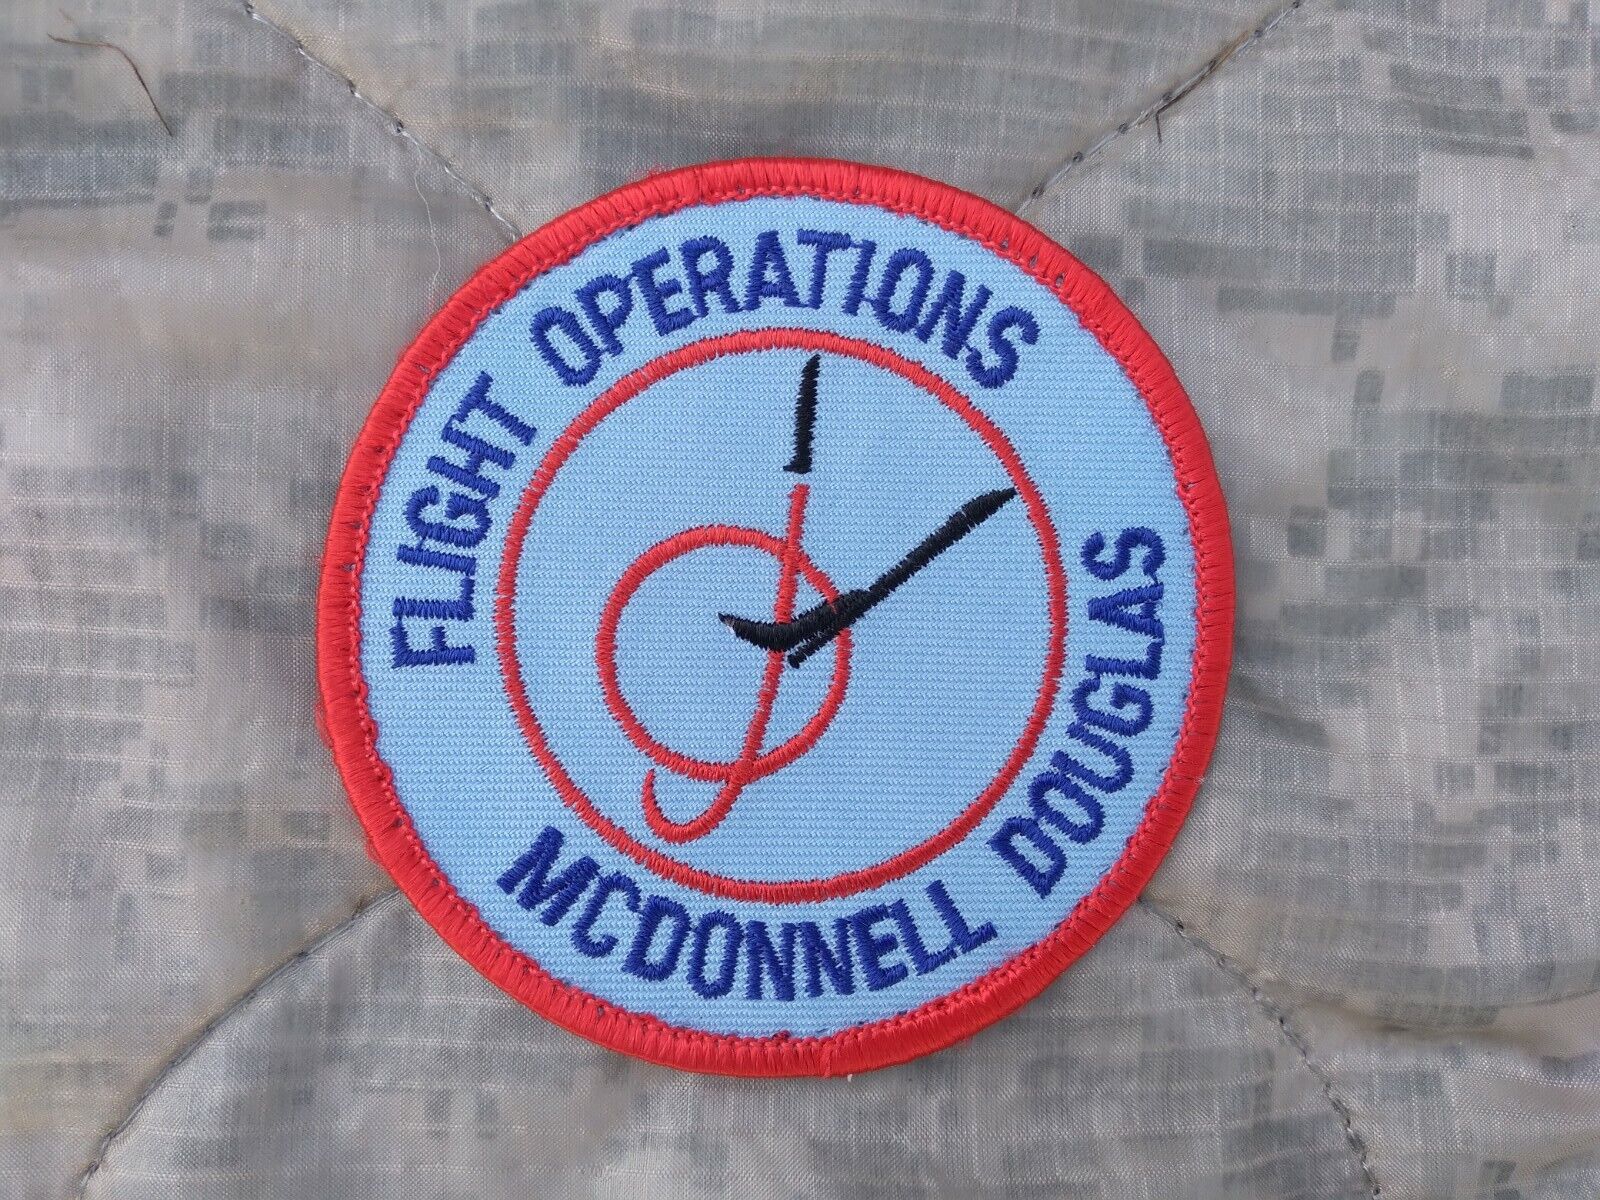  McDonnell Douglas Aircraft Flight Operations Patch-New